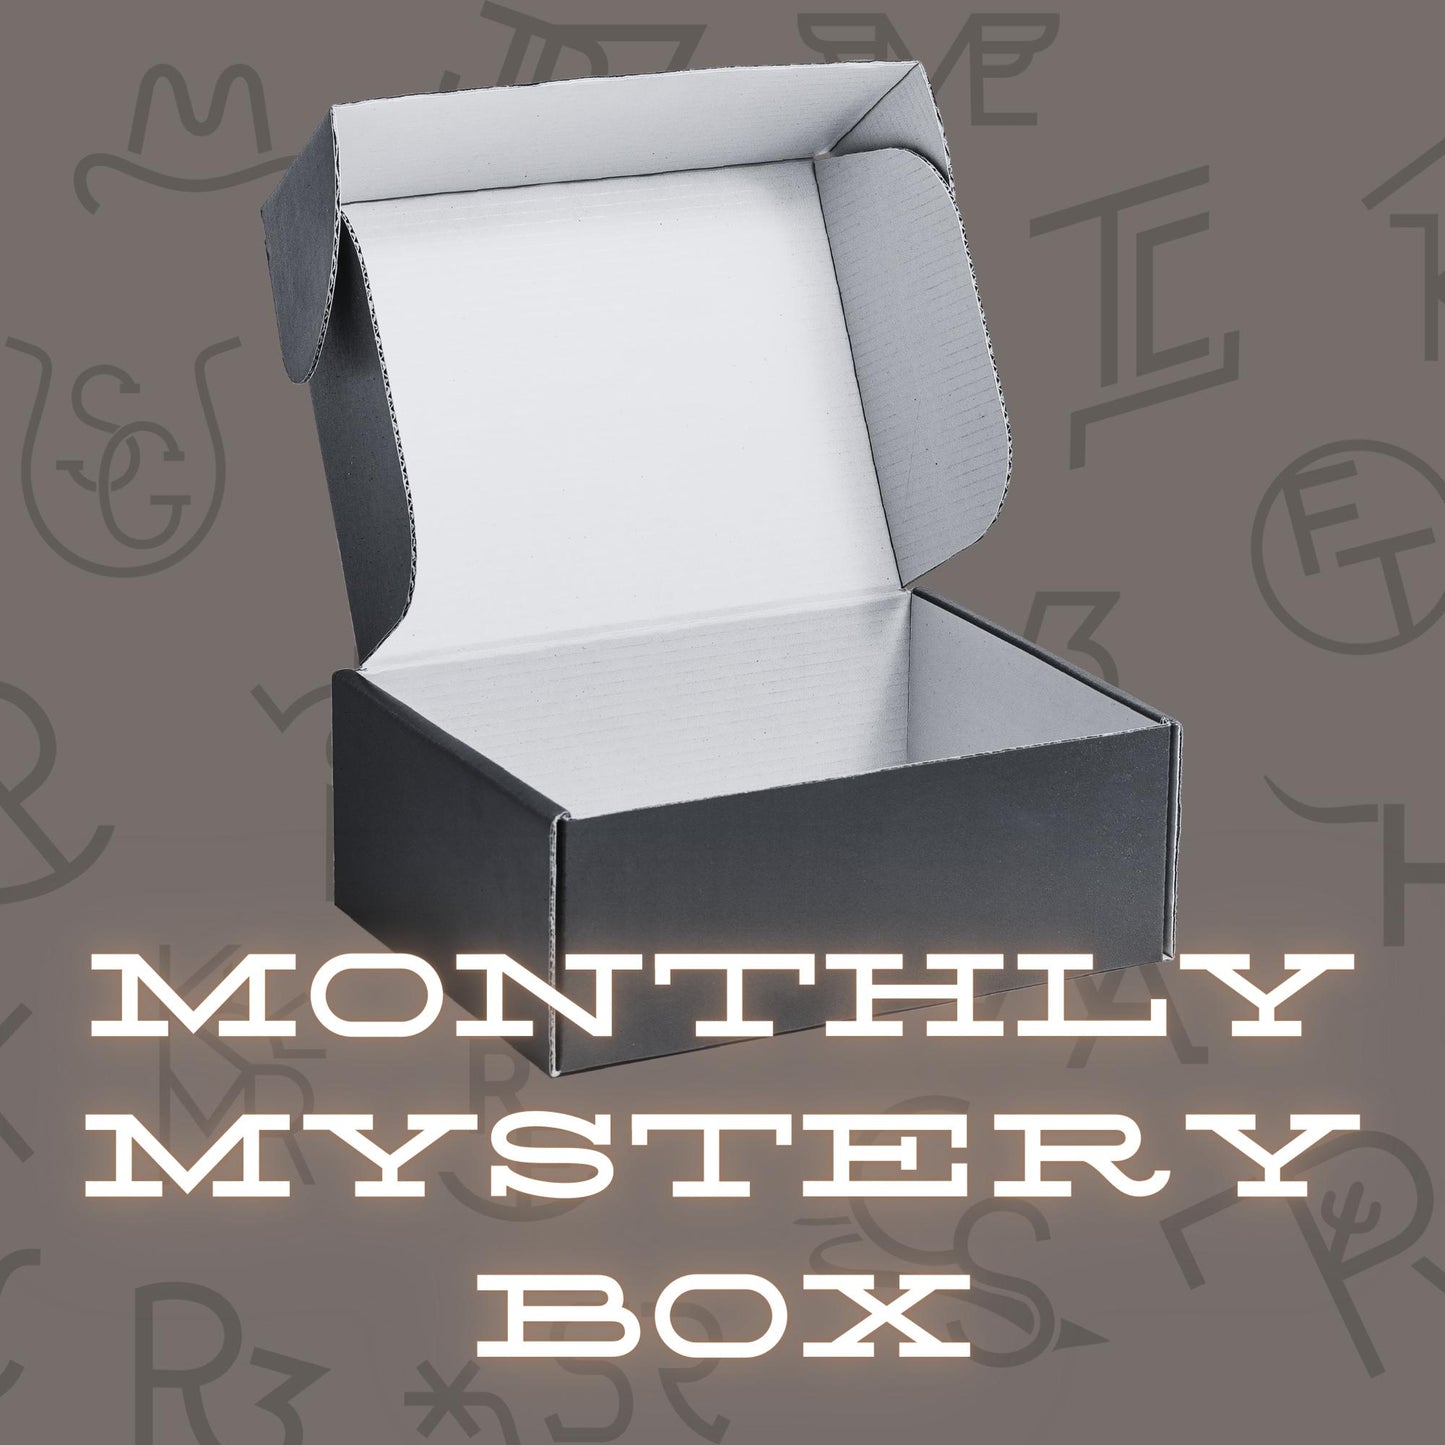 Blue Mystery Box 